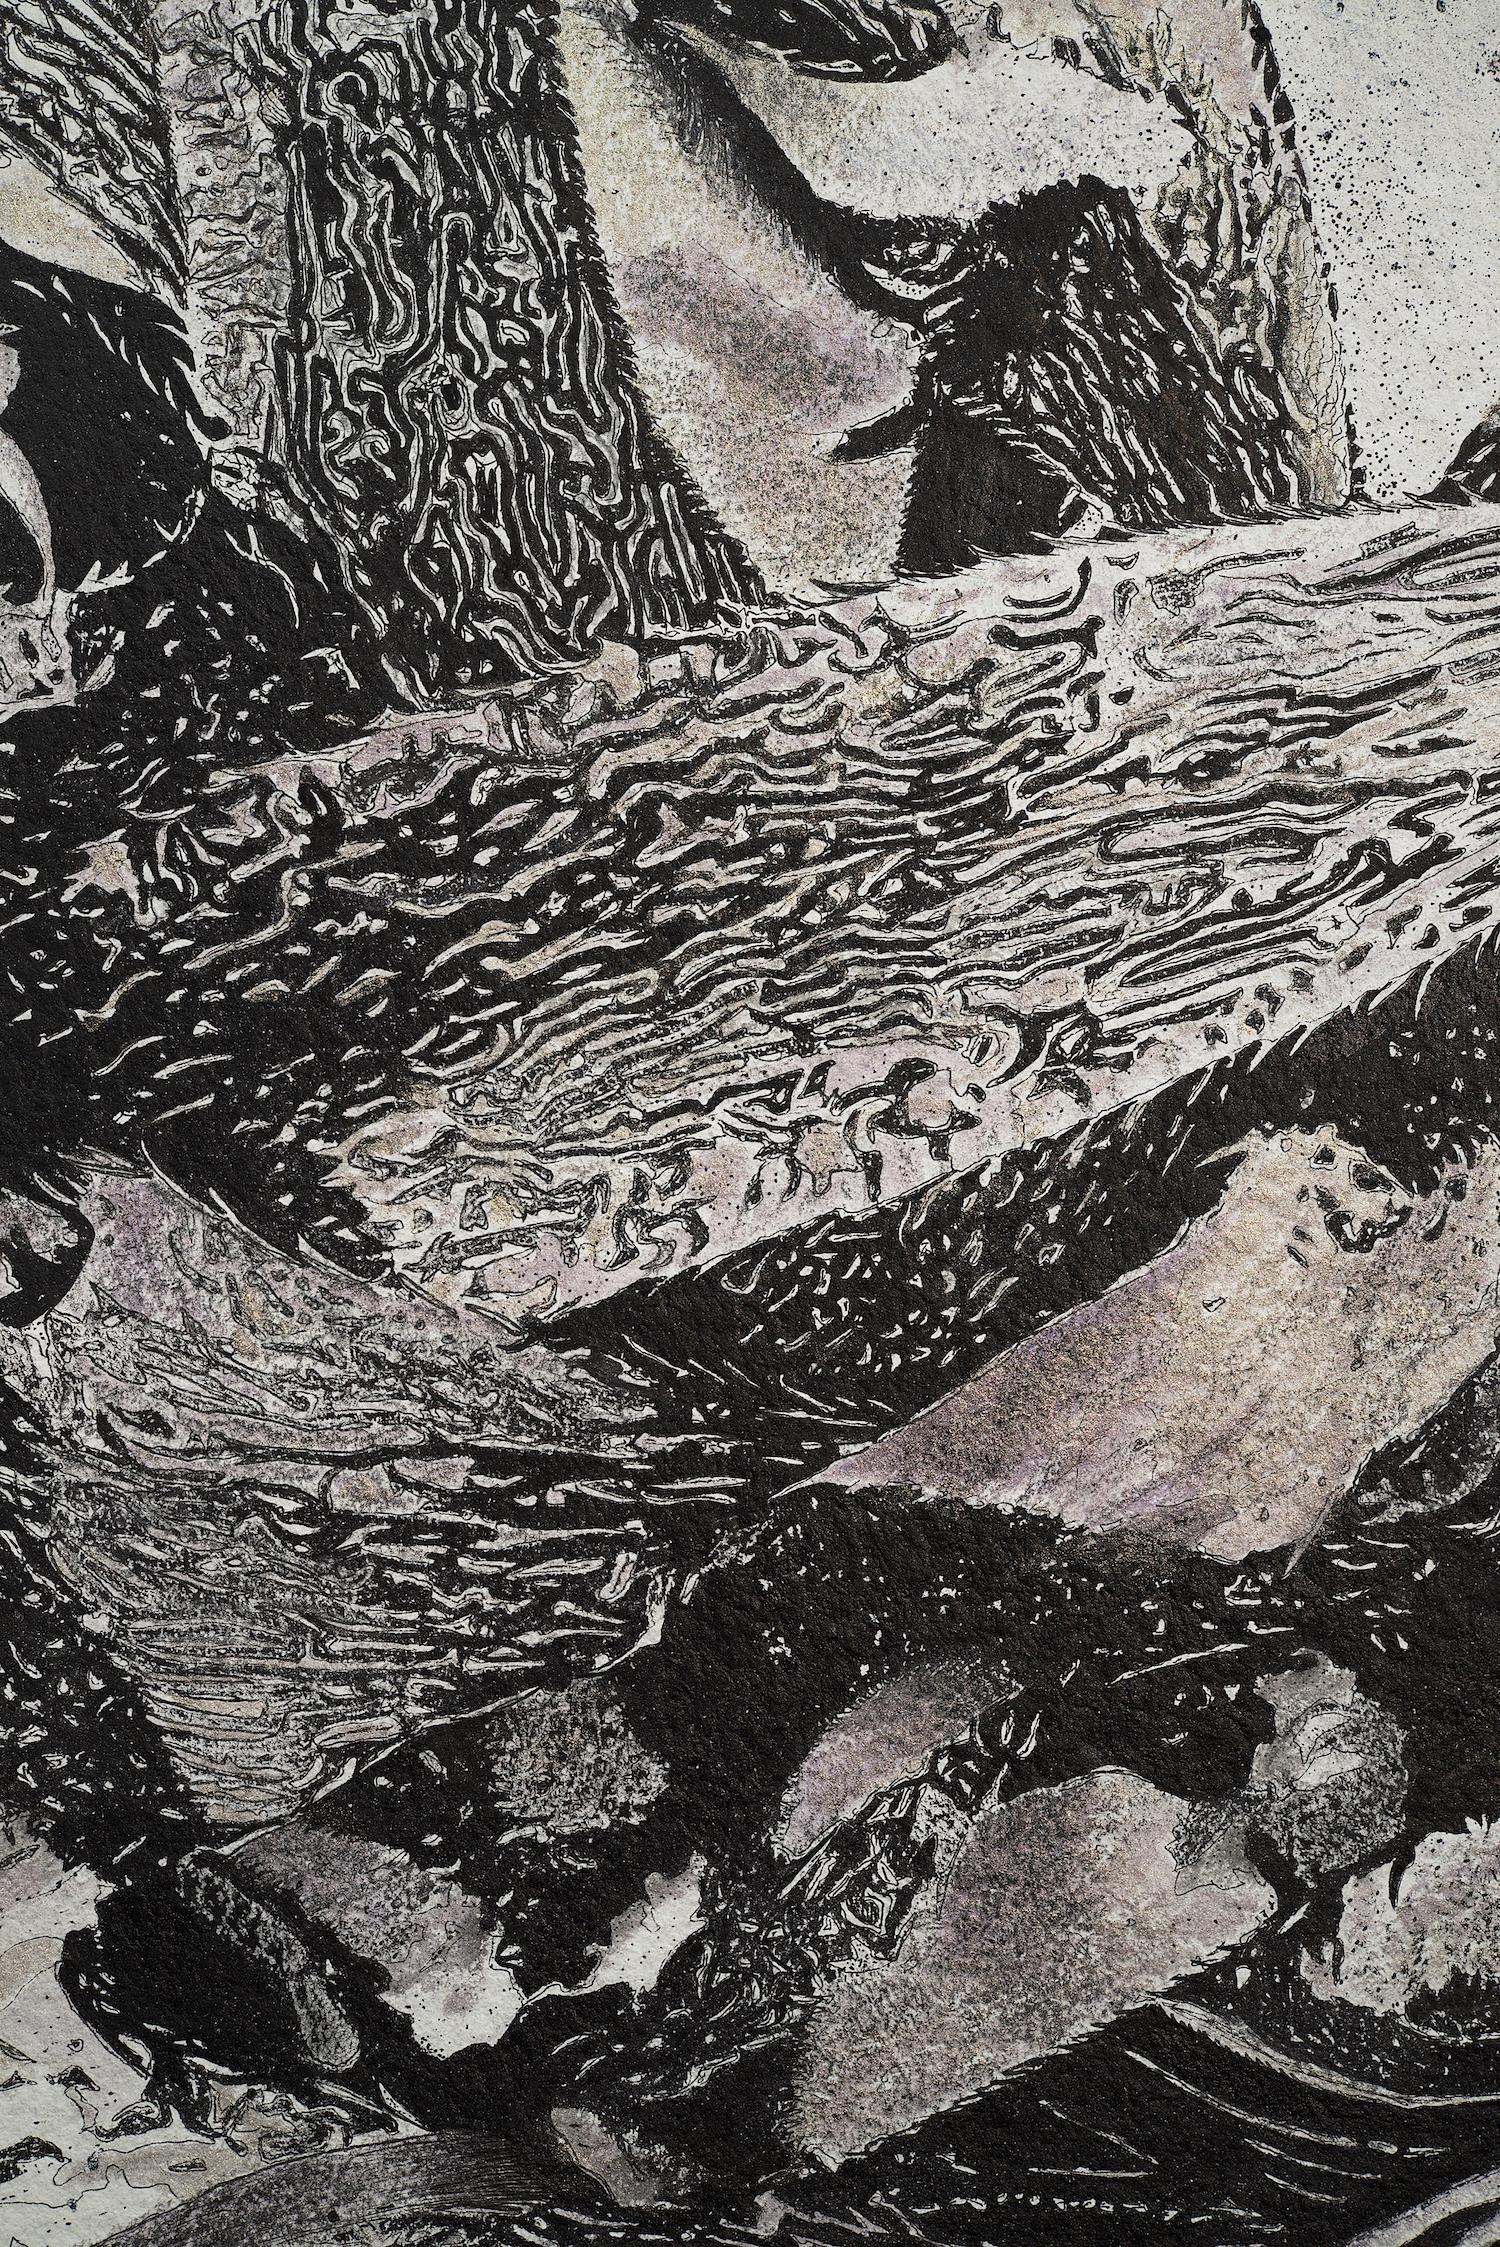 Alga Aligata No. 5 - seaweed kelp oceanic abstracted work on paper - Painting by Frédéric Choisel